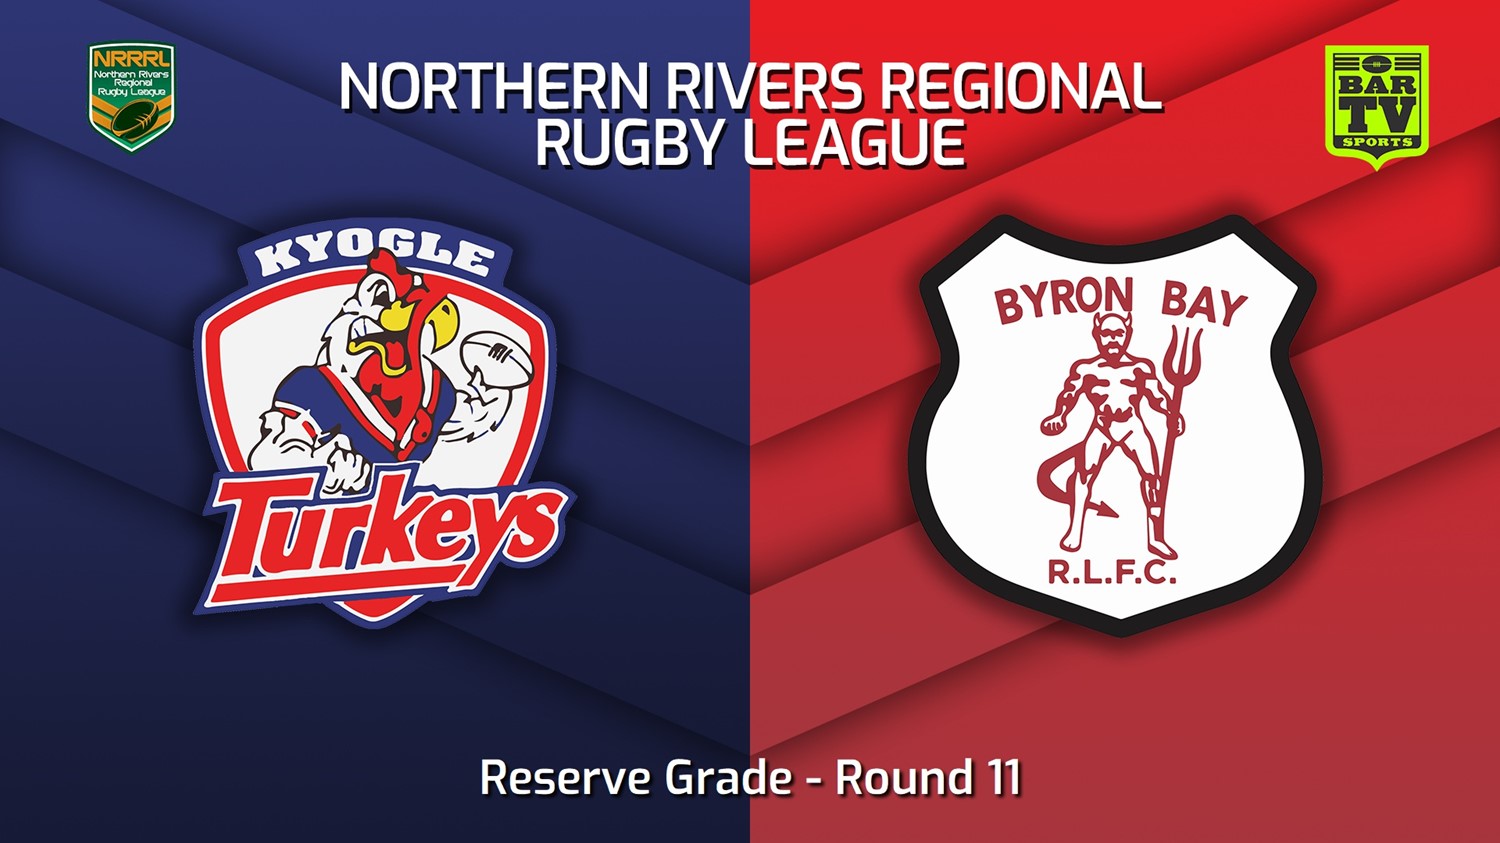 220710-Northern Rivers Round 11 - Reserve Grade - Kyogle Turkeys v Byron Bay Red Devils Slate Image